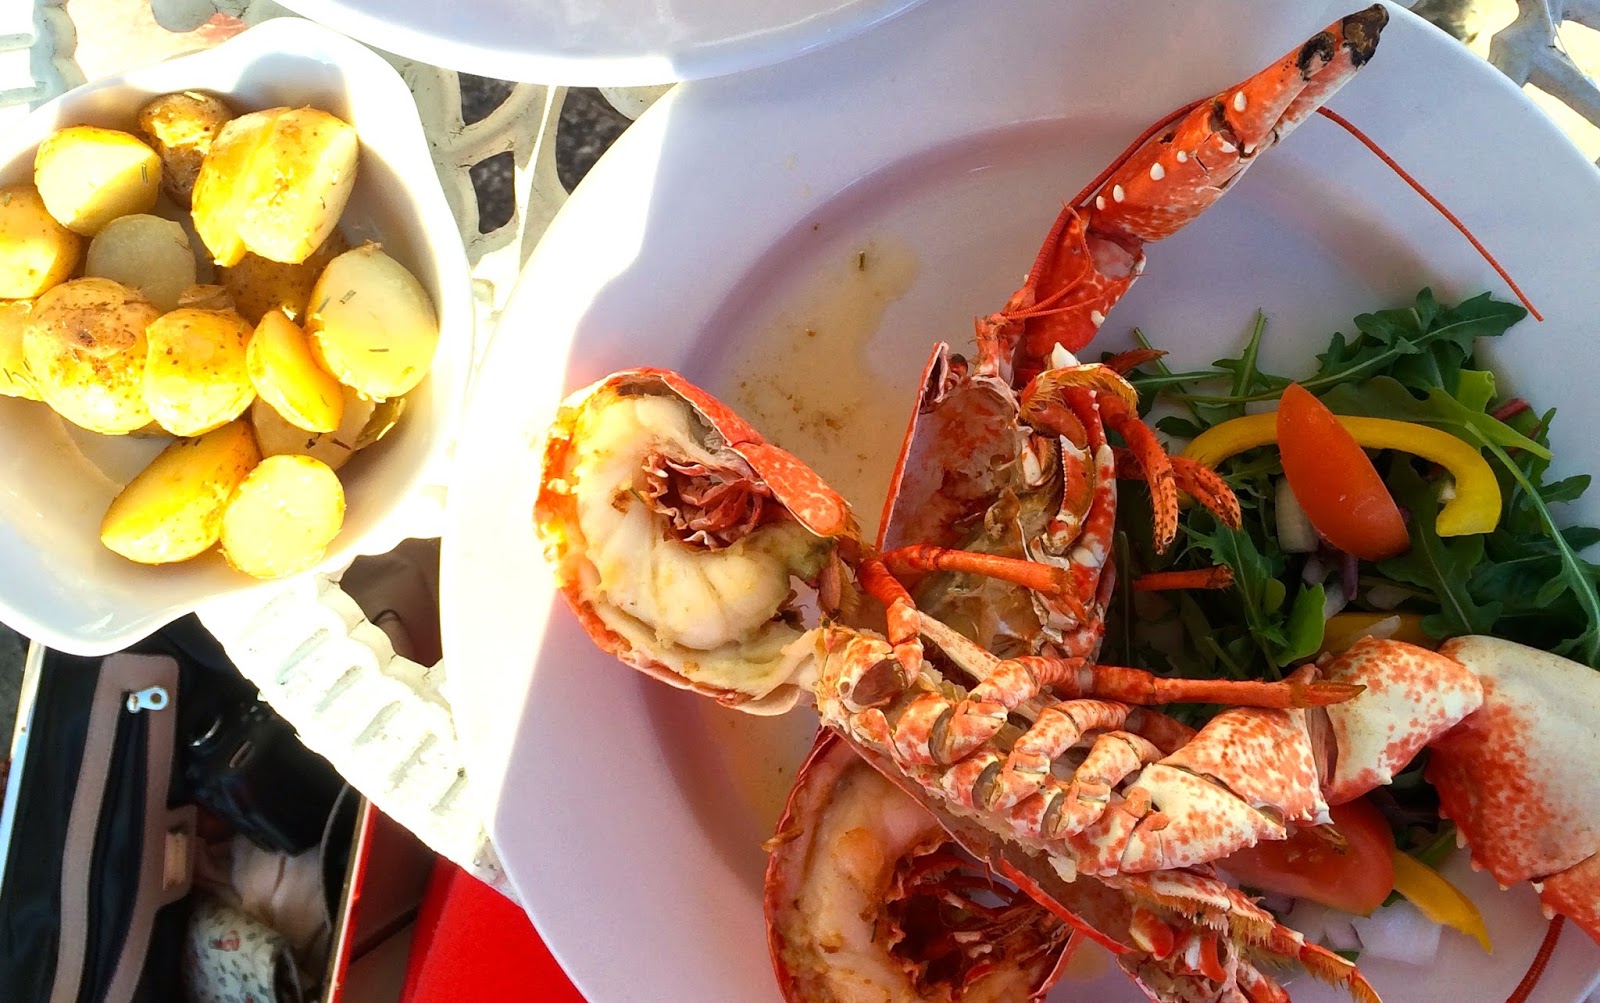 Lobster at Lulworth Cove, food bloggers, UK lifestyle blog